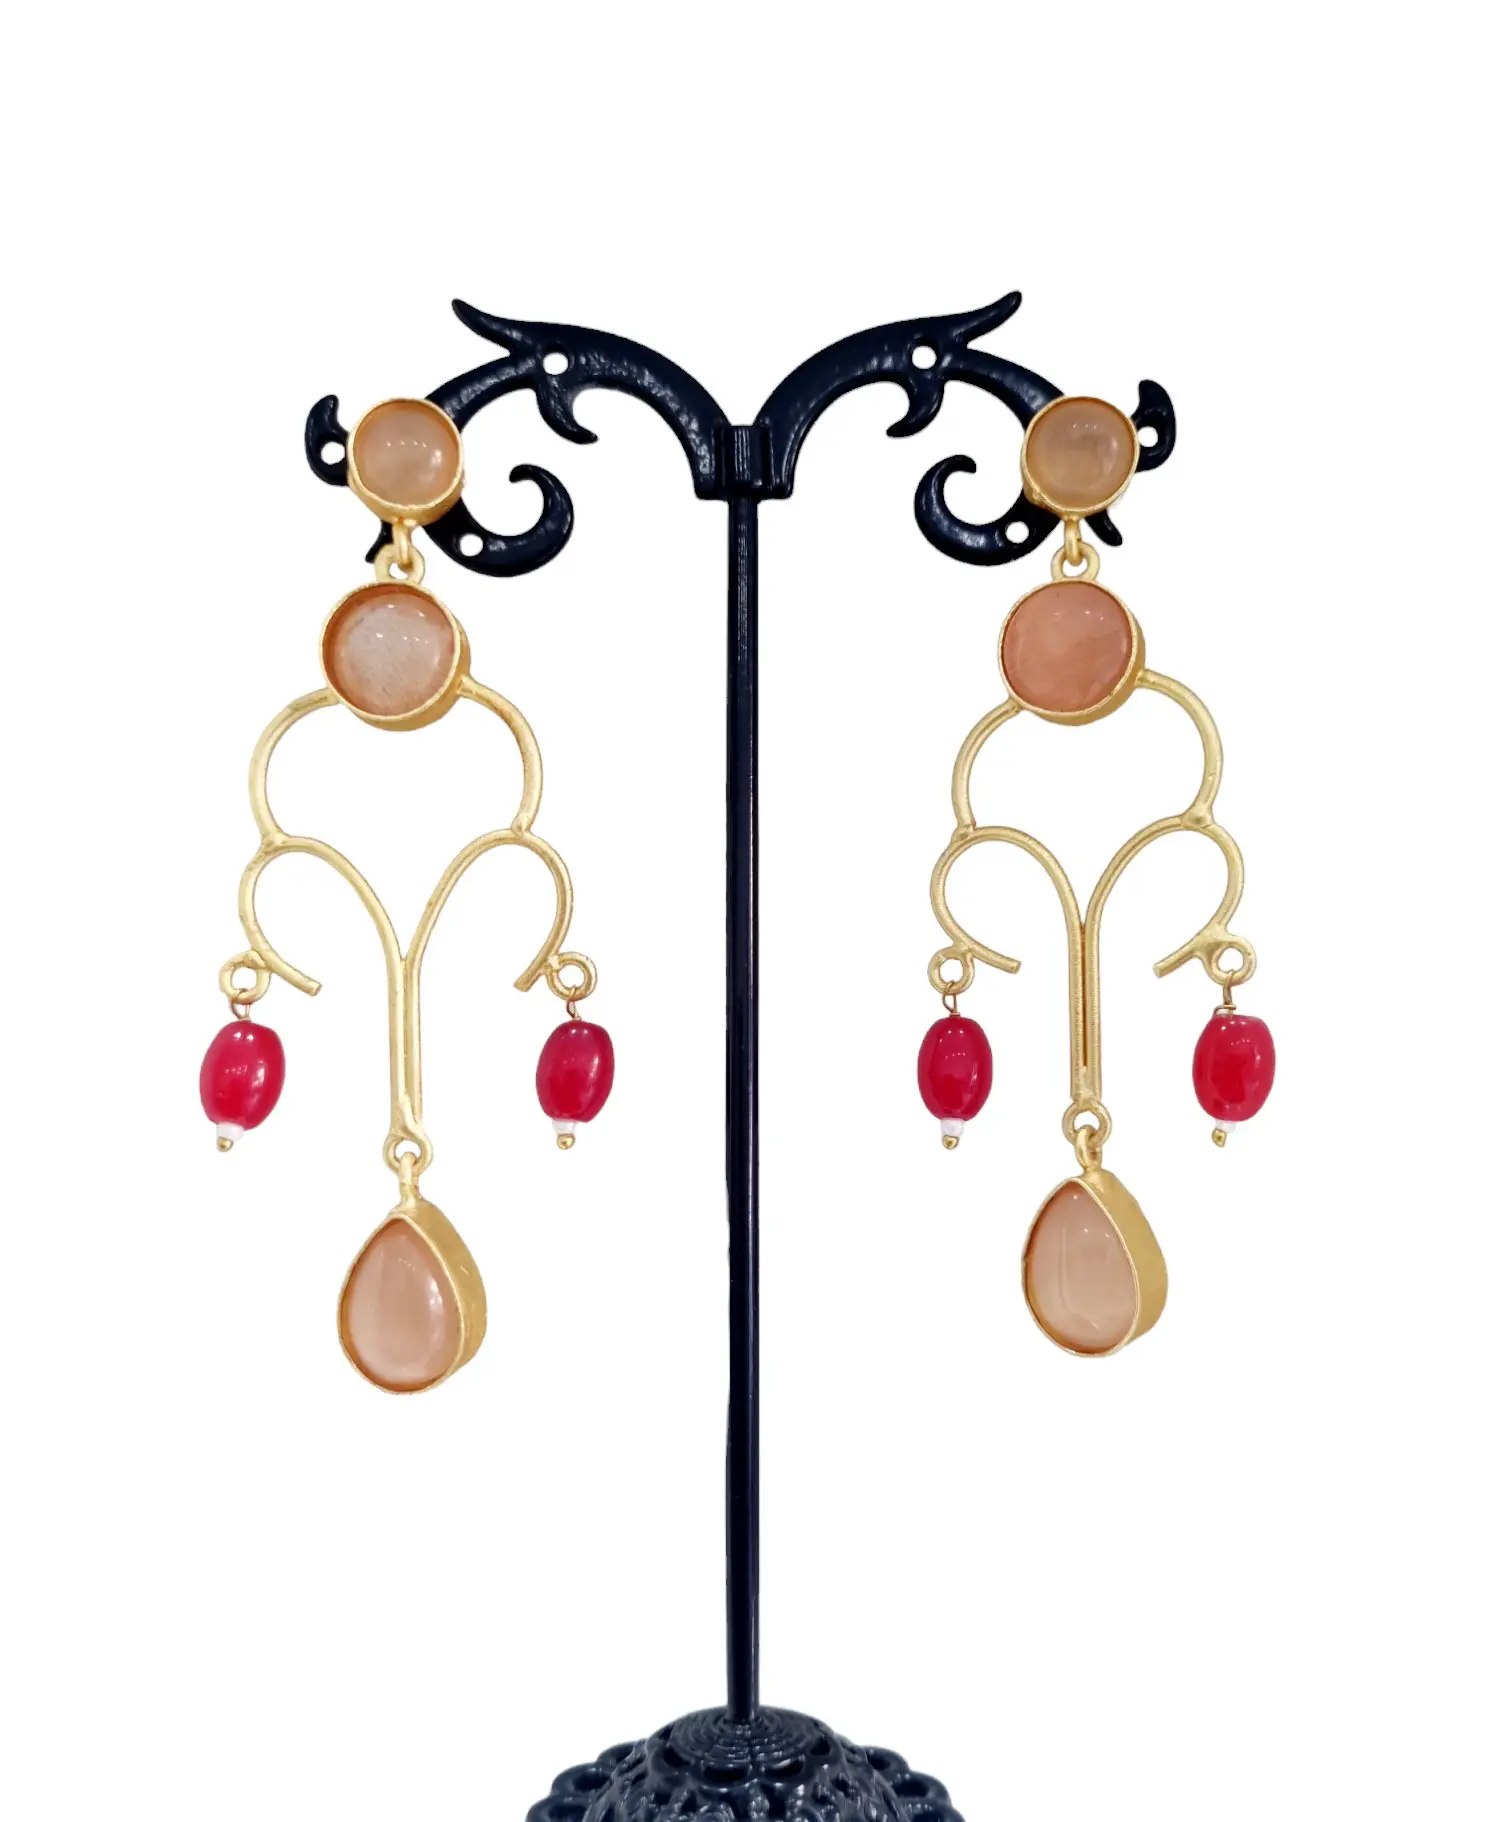 Elegant earrings in brass and cat's eye – Length 7cm Weight 7g